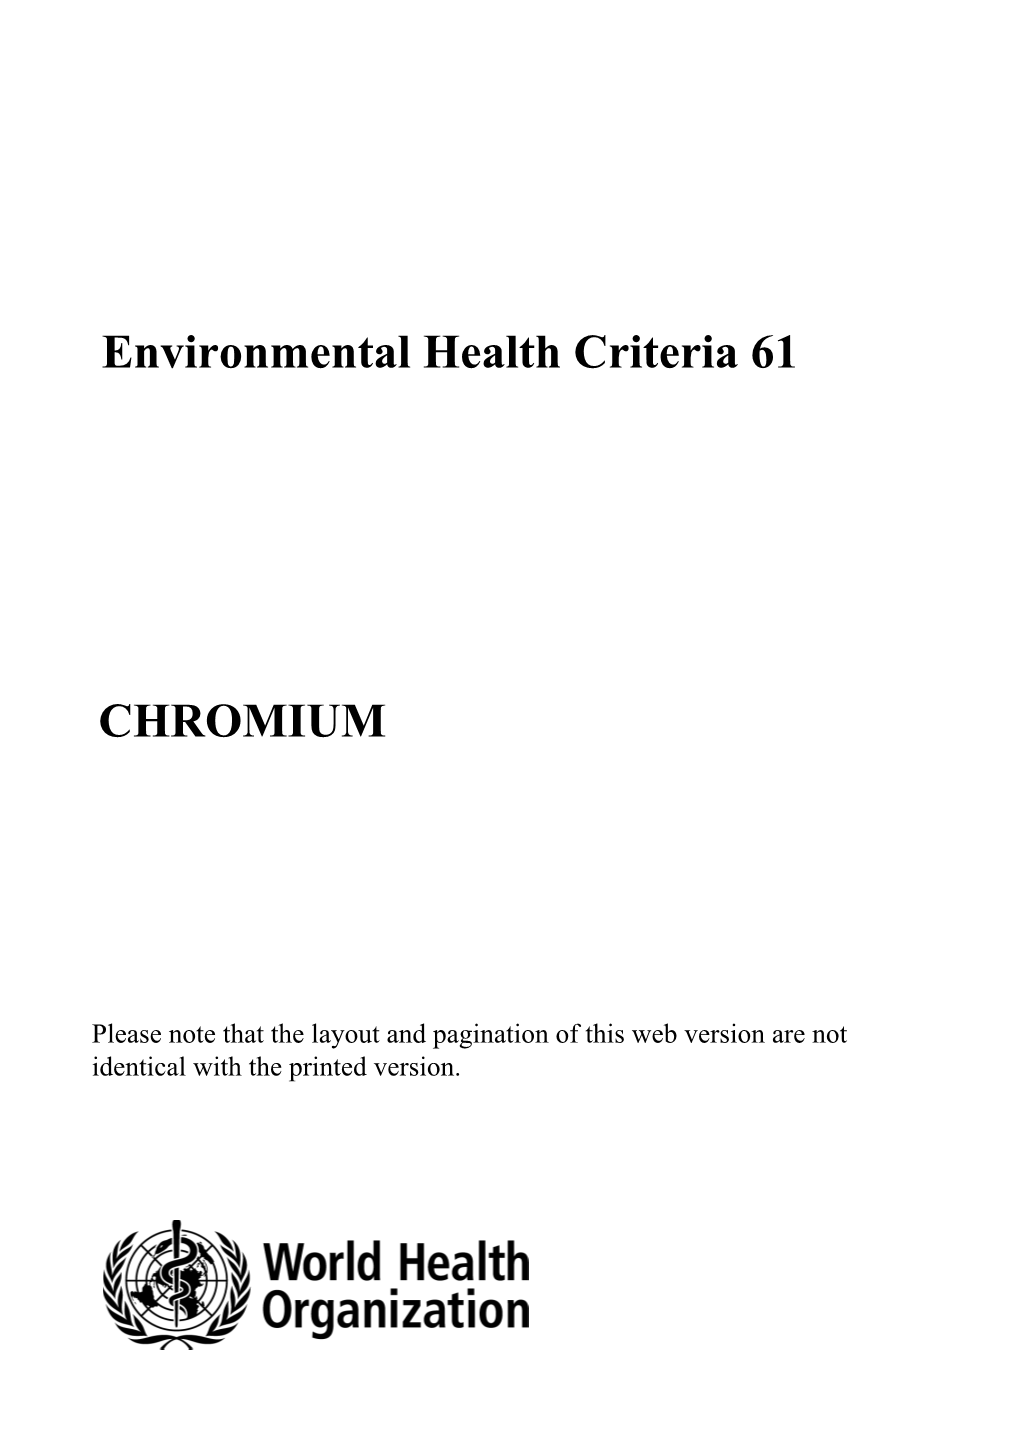 Environmental Health Criteria 61 CHROMIUM